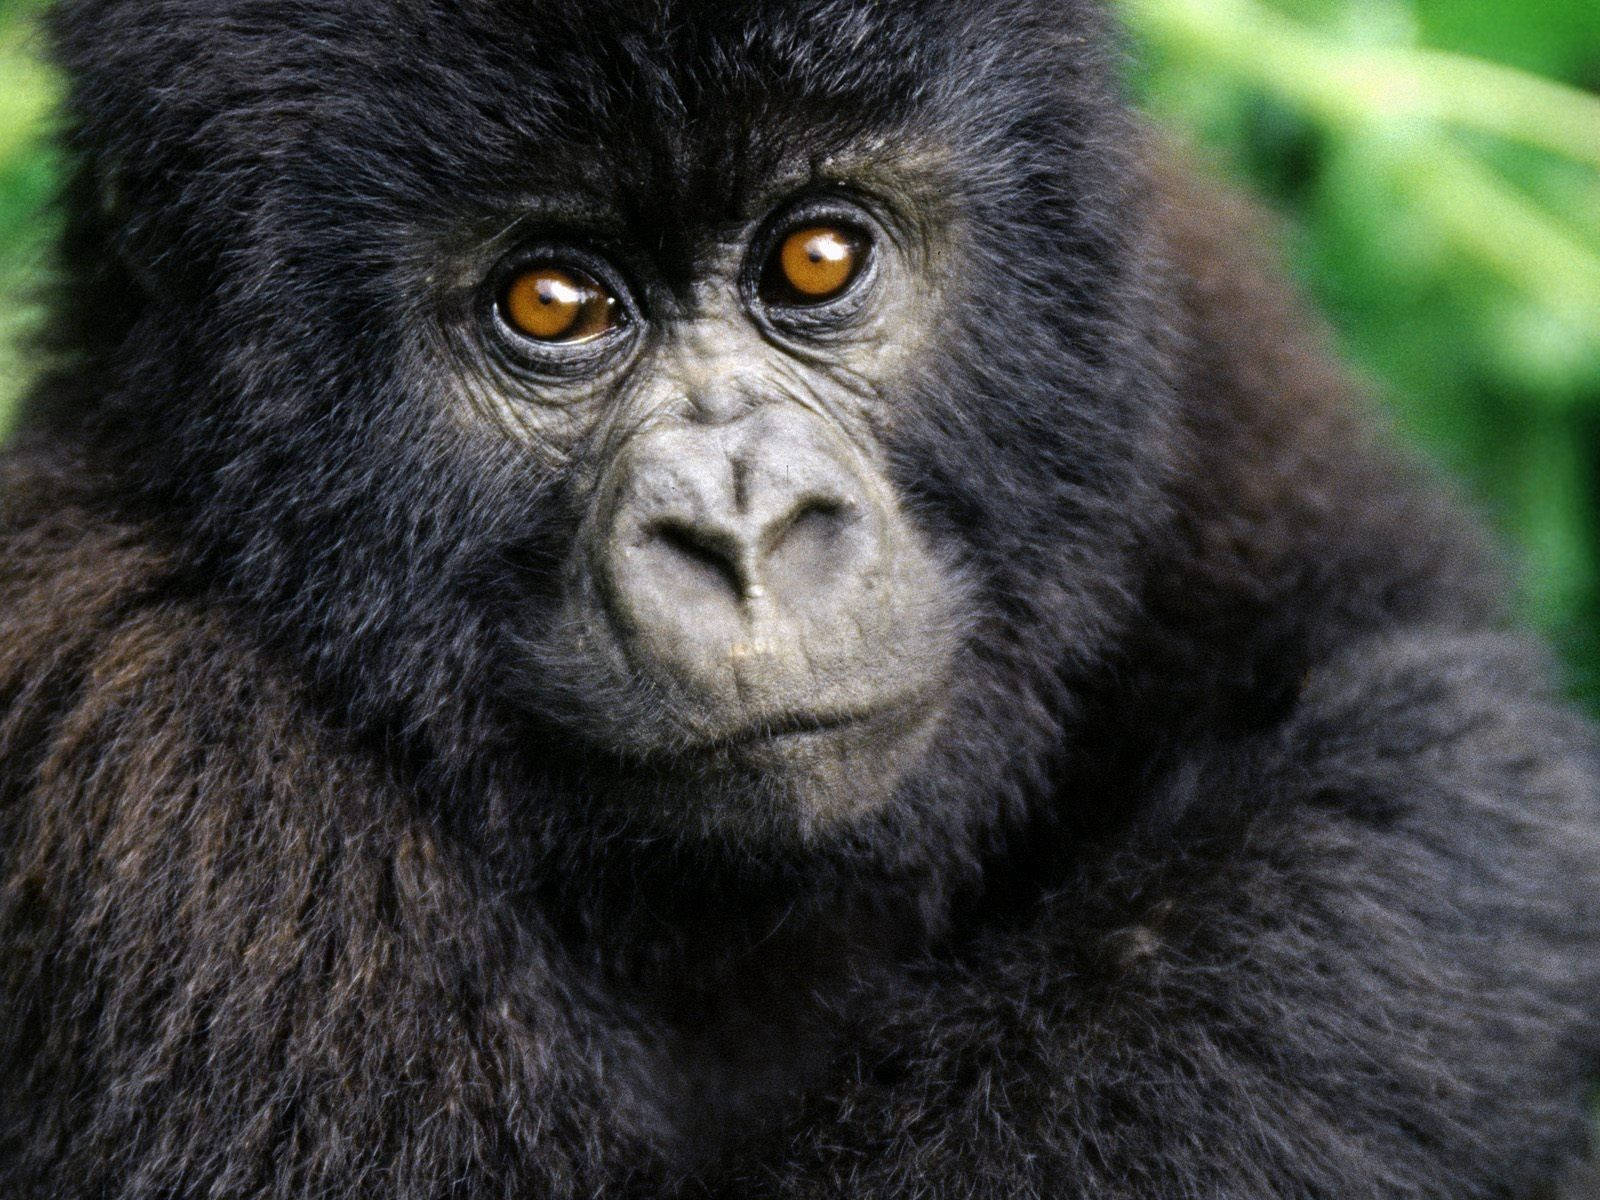 An Adorable Baby Gorilla Cub Background